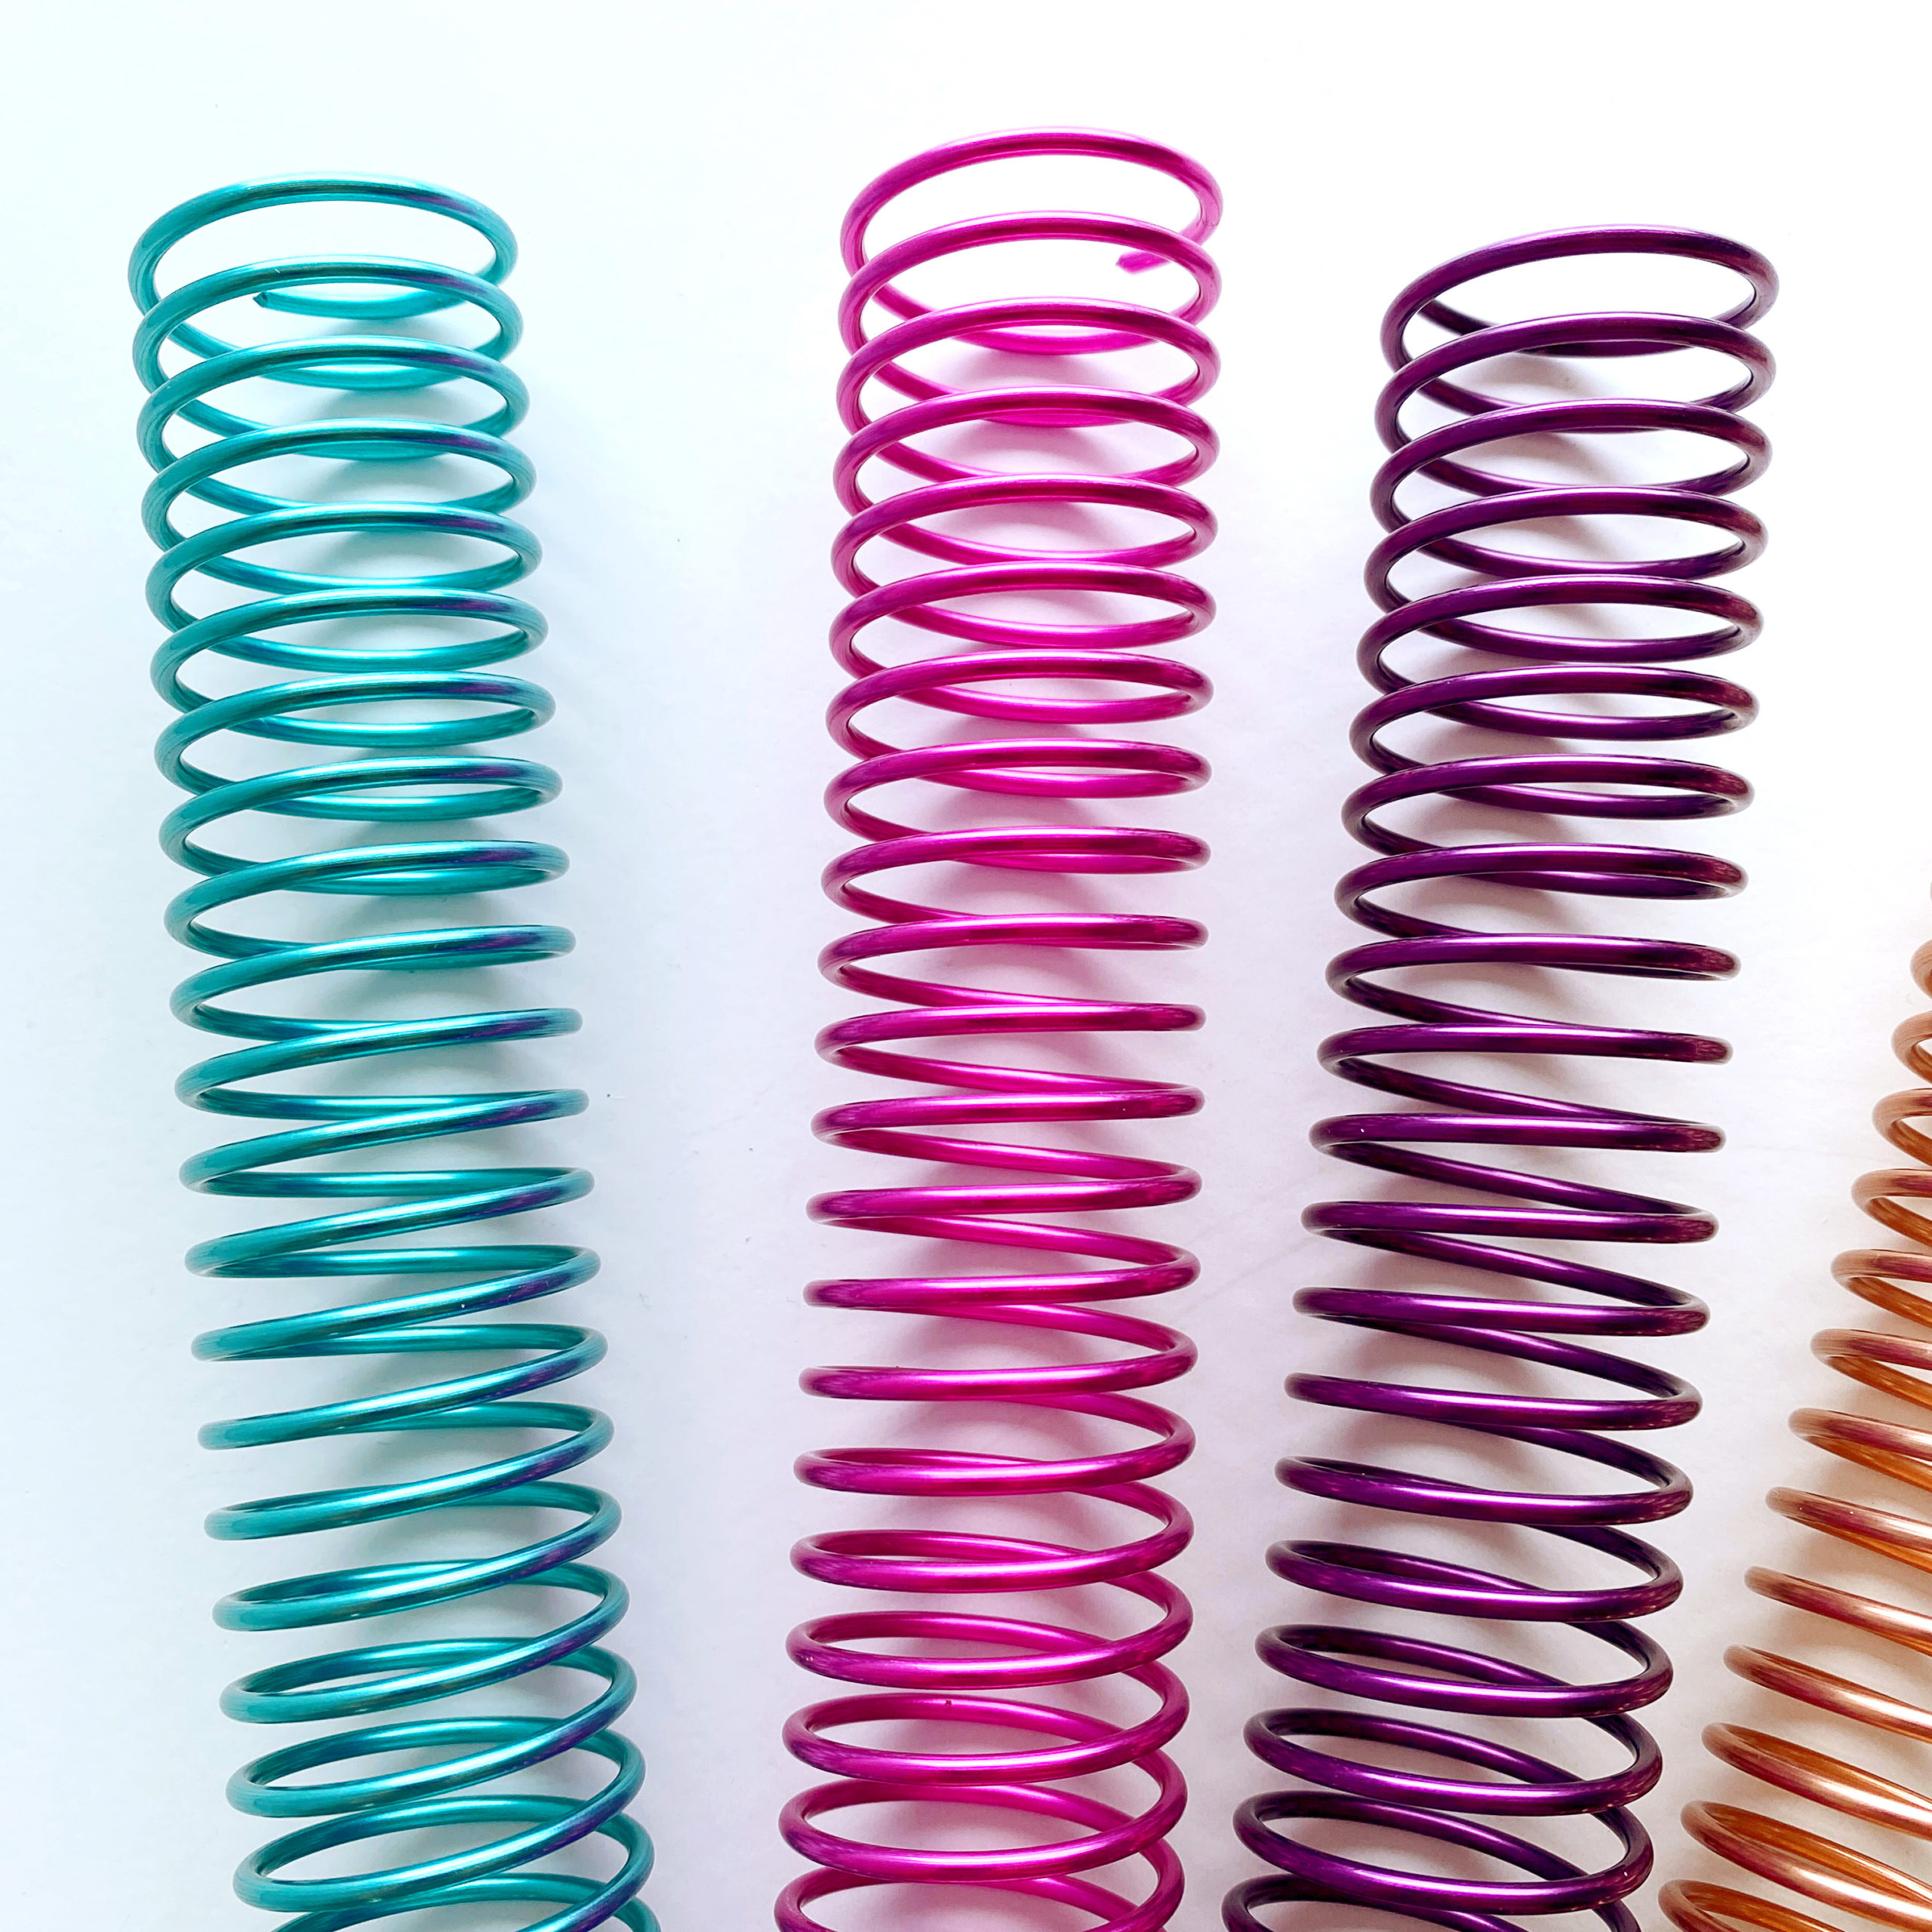 metallic spiral coil binding spines